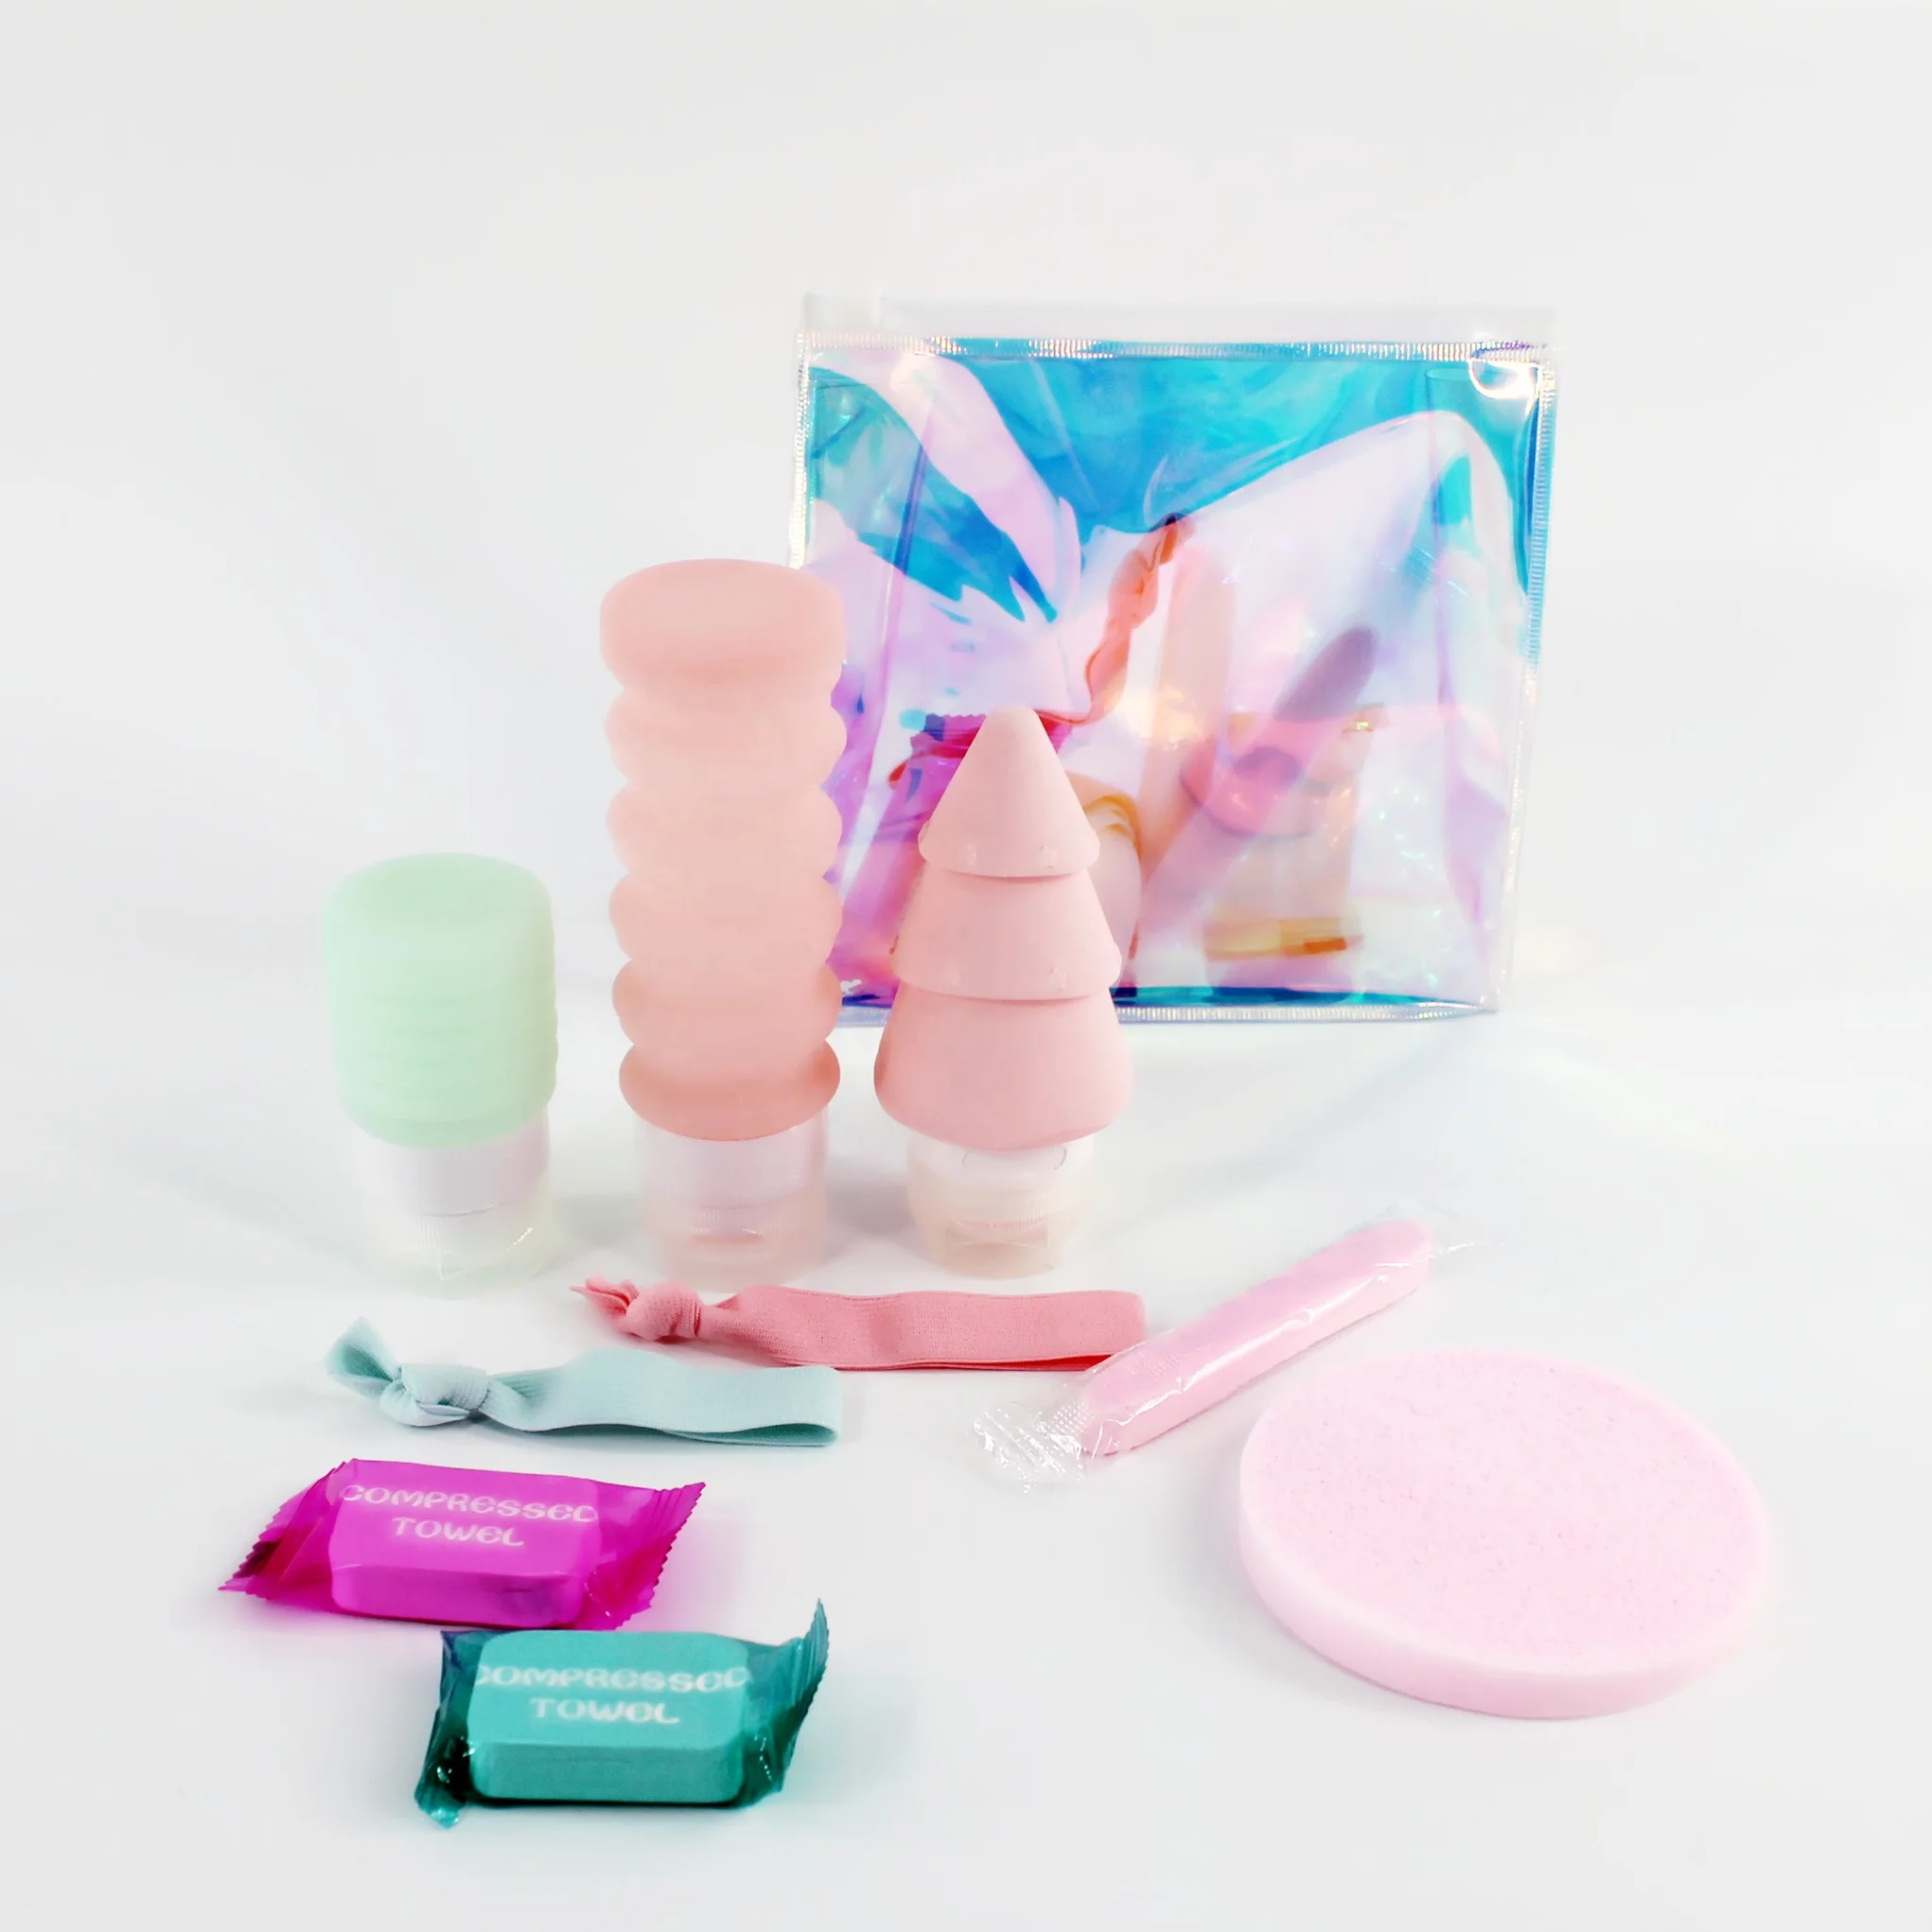 EASETRIP Hotselling Travel Foldable Silicone Bottle Travel Kit Gifts reusable skincare travel kits For Women facial kit (1600149288874)